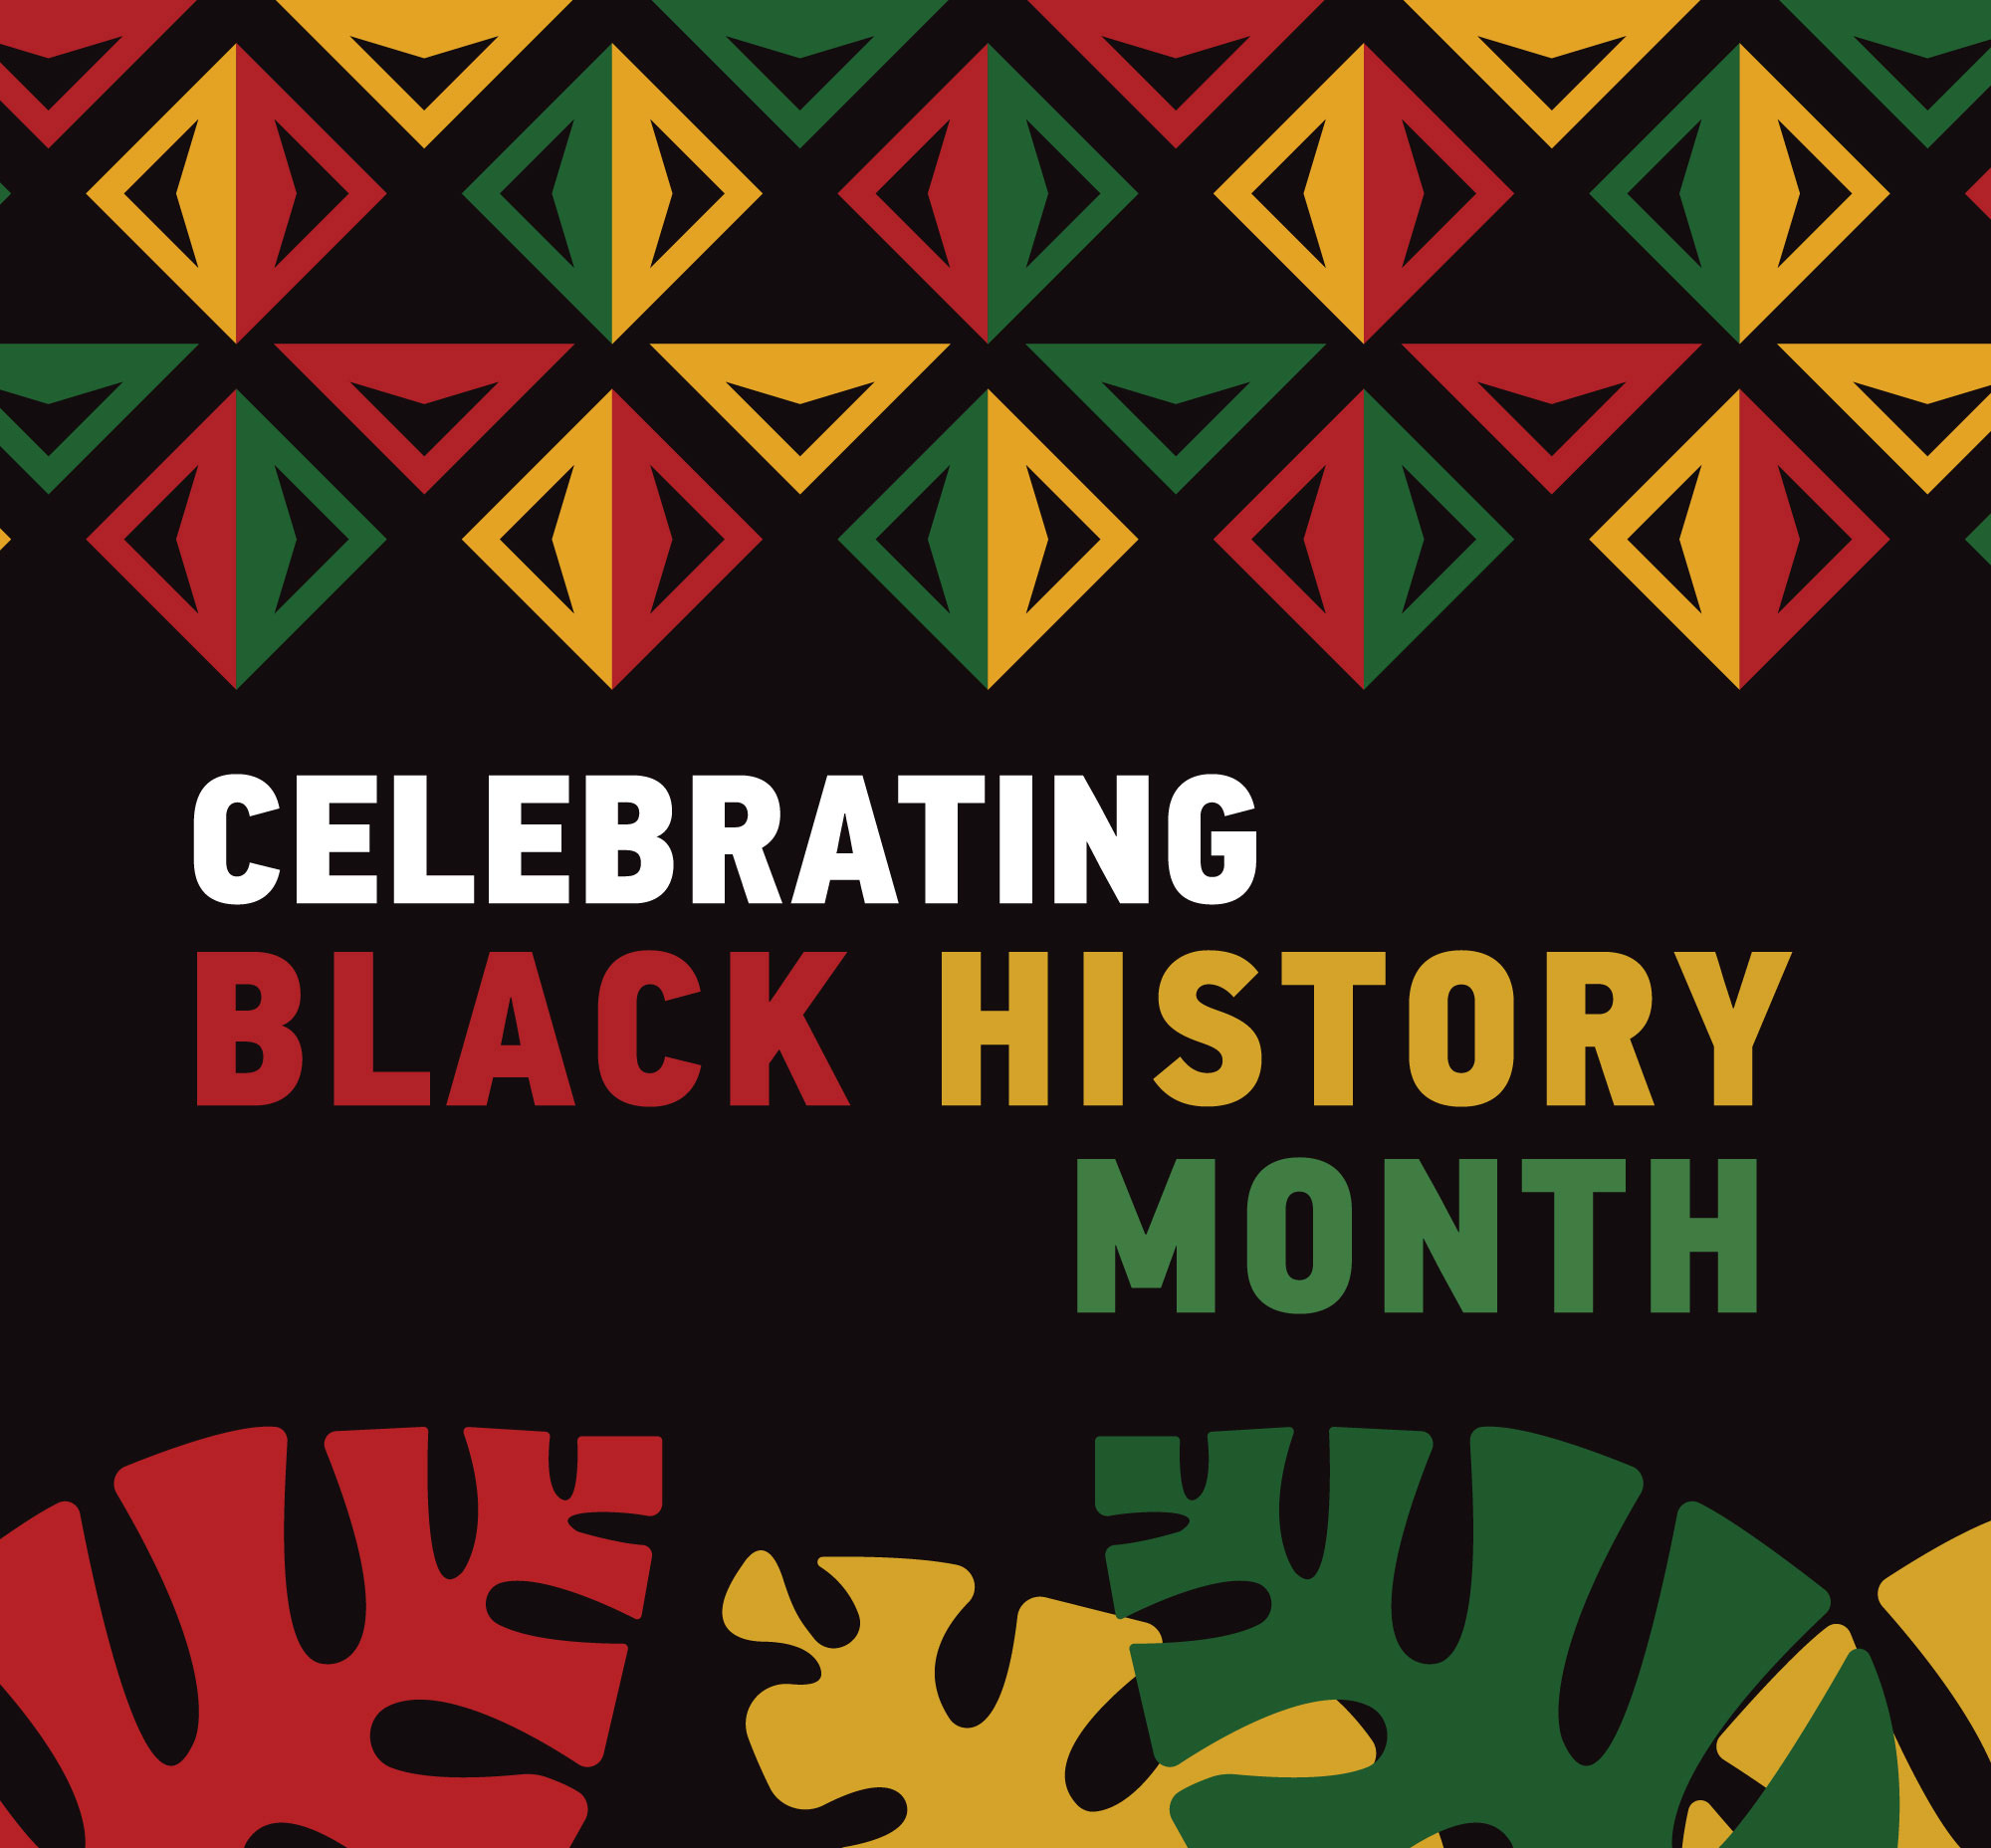 Celebrating black history month